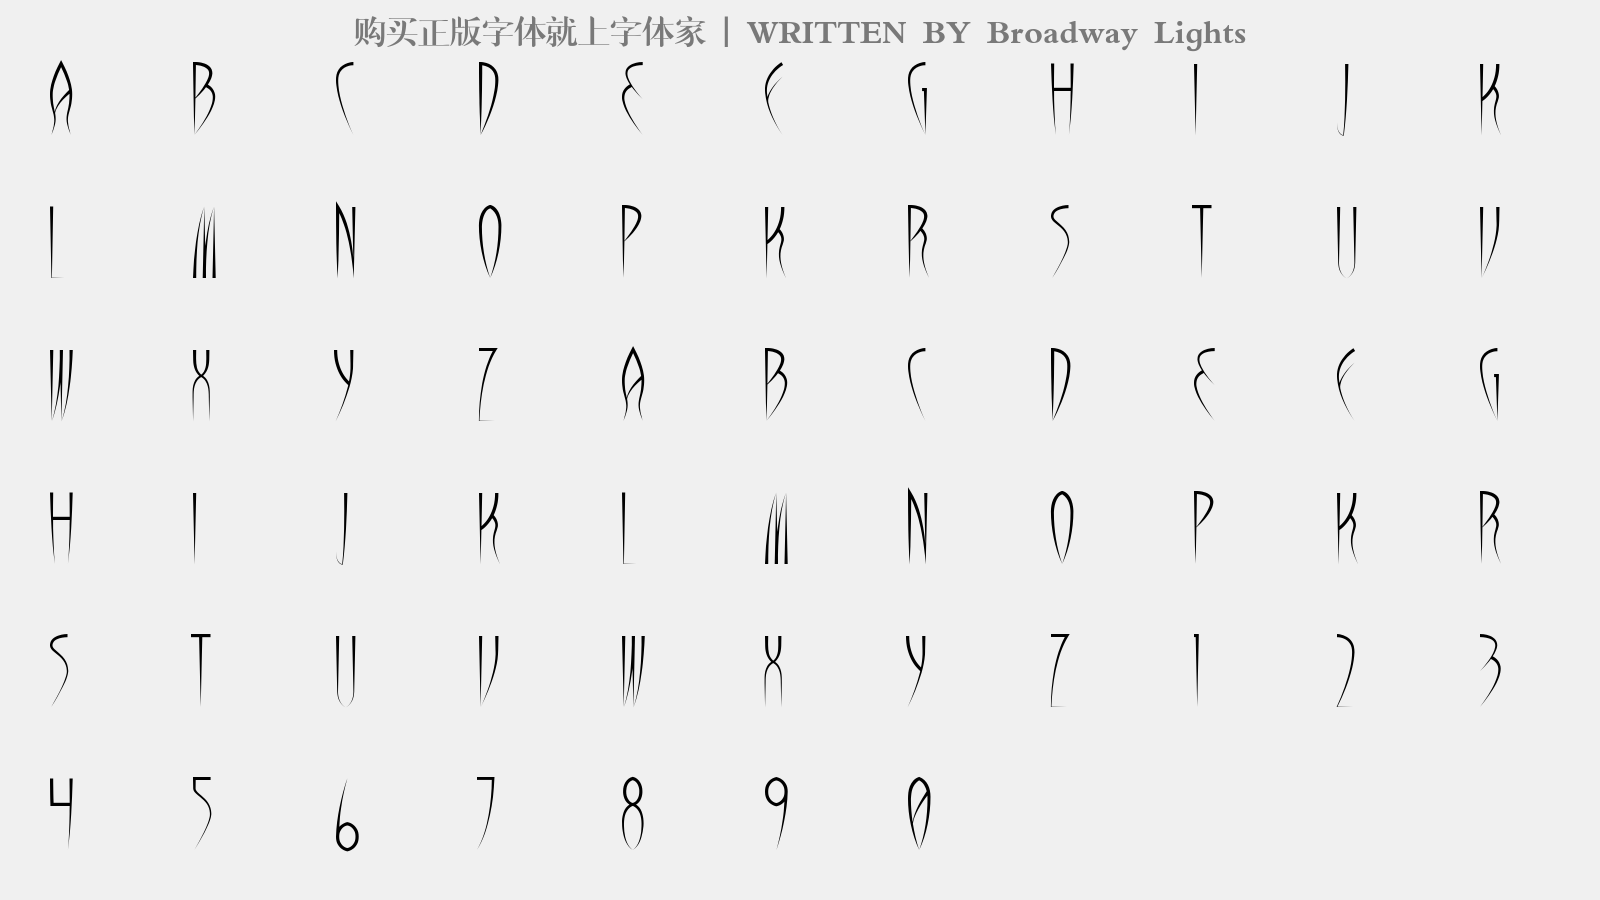 Broadway Lights - 大写字母/小写字母/数字